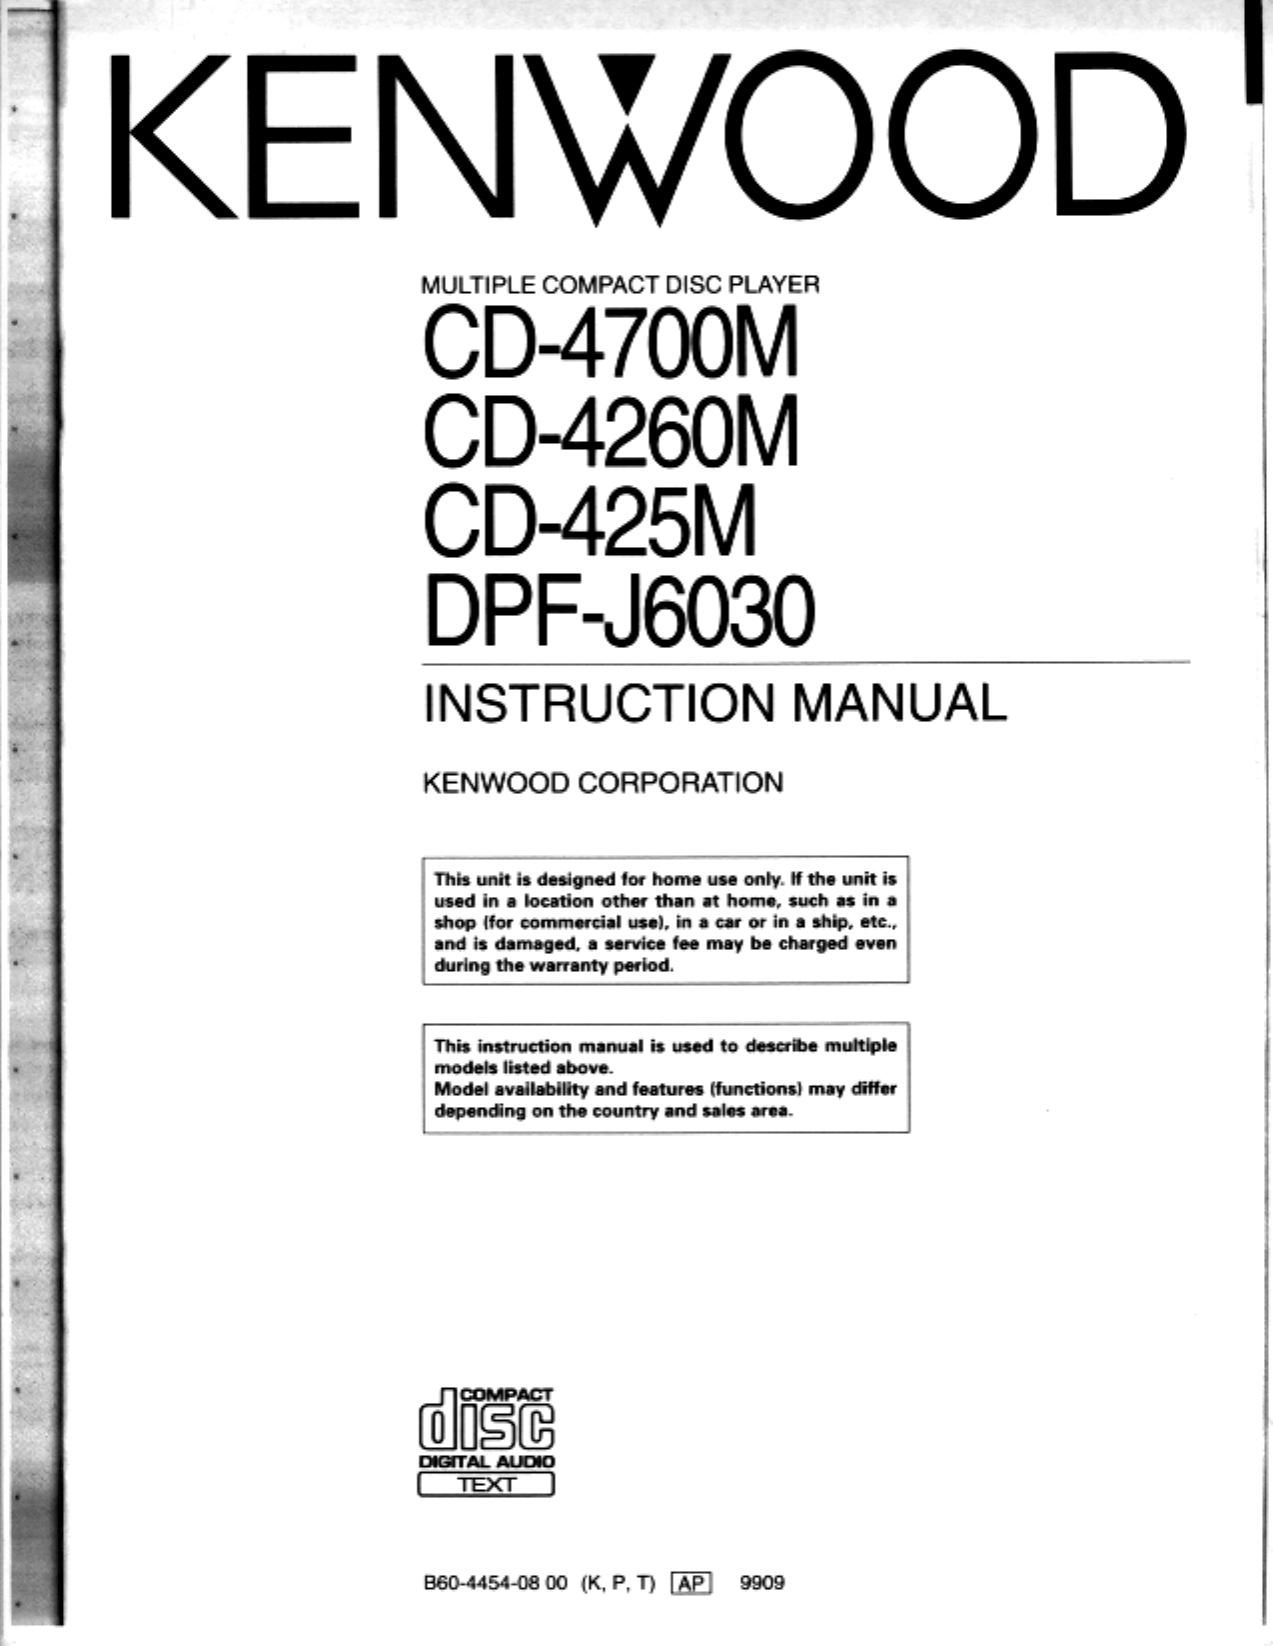 Kenwood DPFJ 6030 Owners Manual